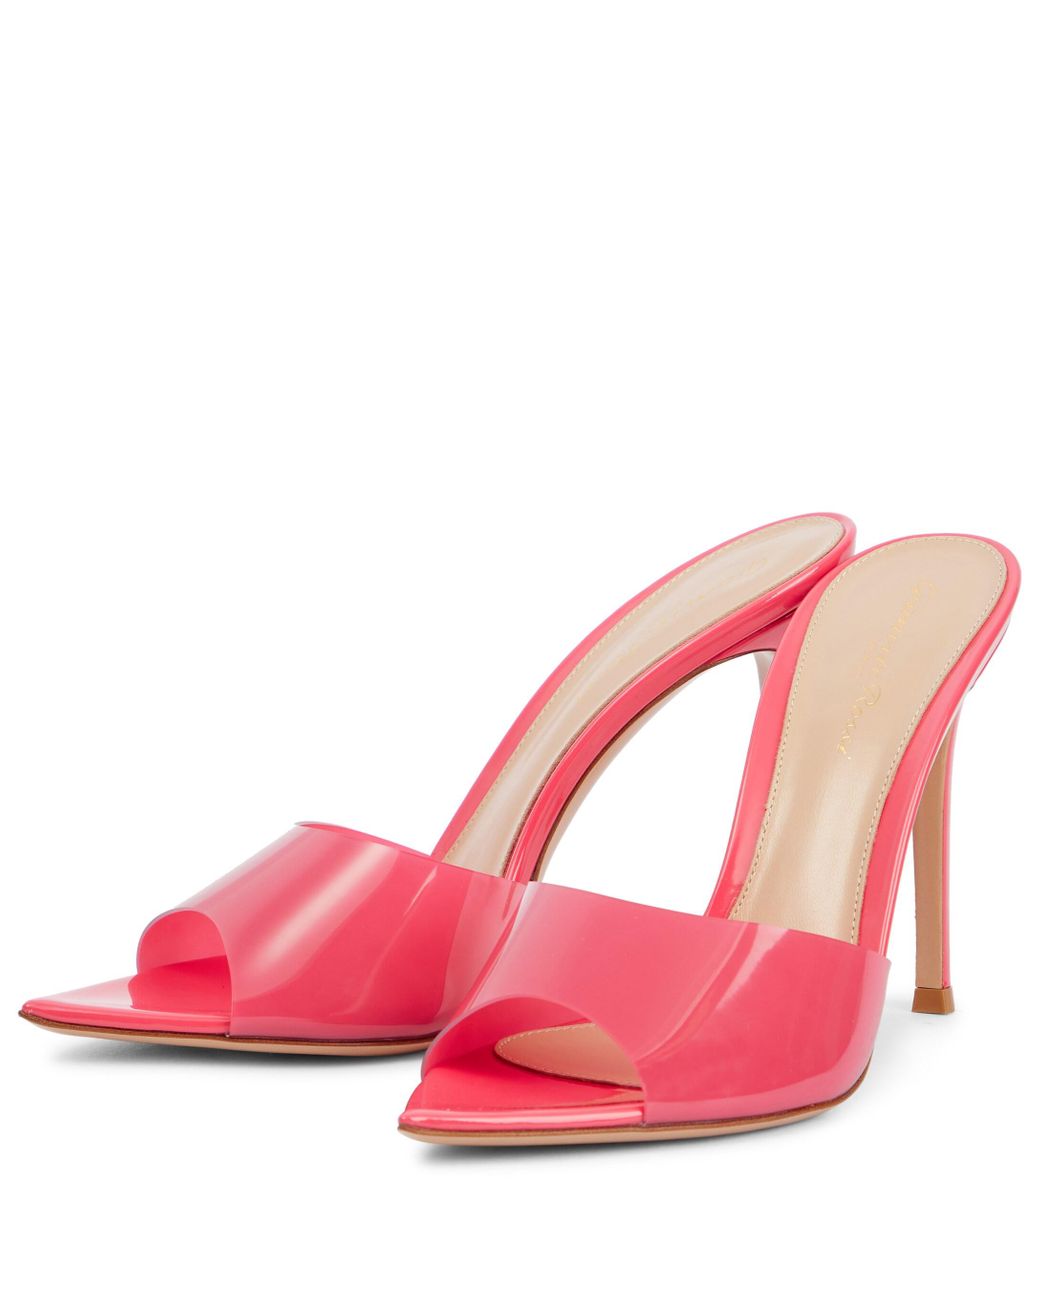 Gianvito Rossi Elle 105 Point-toe Sandals in Pink | Lyst Australia